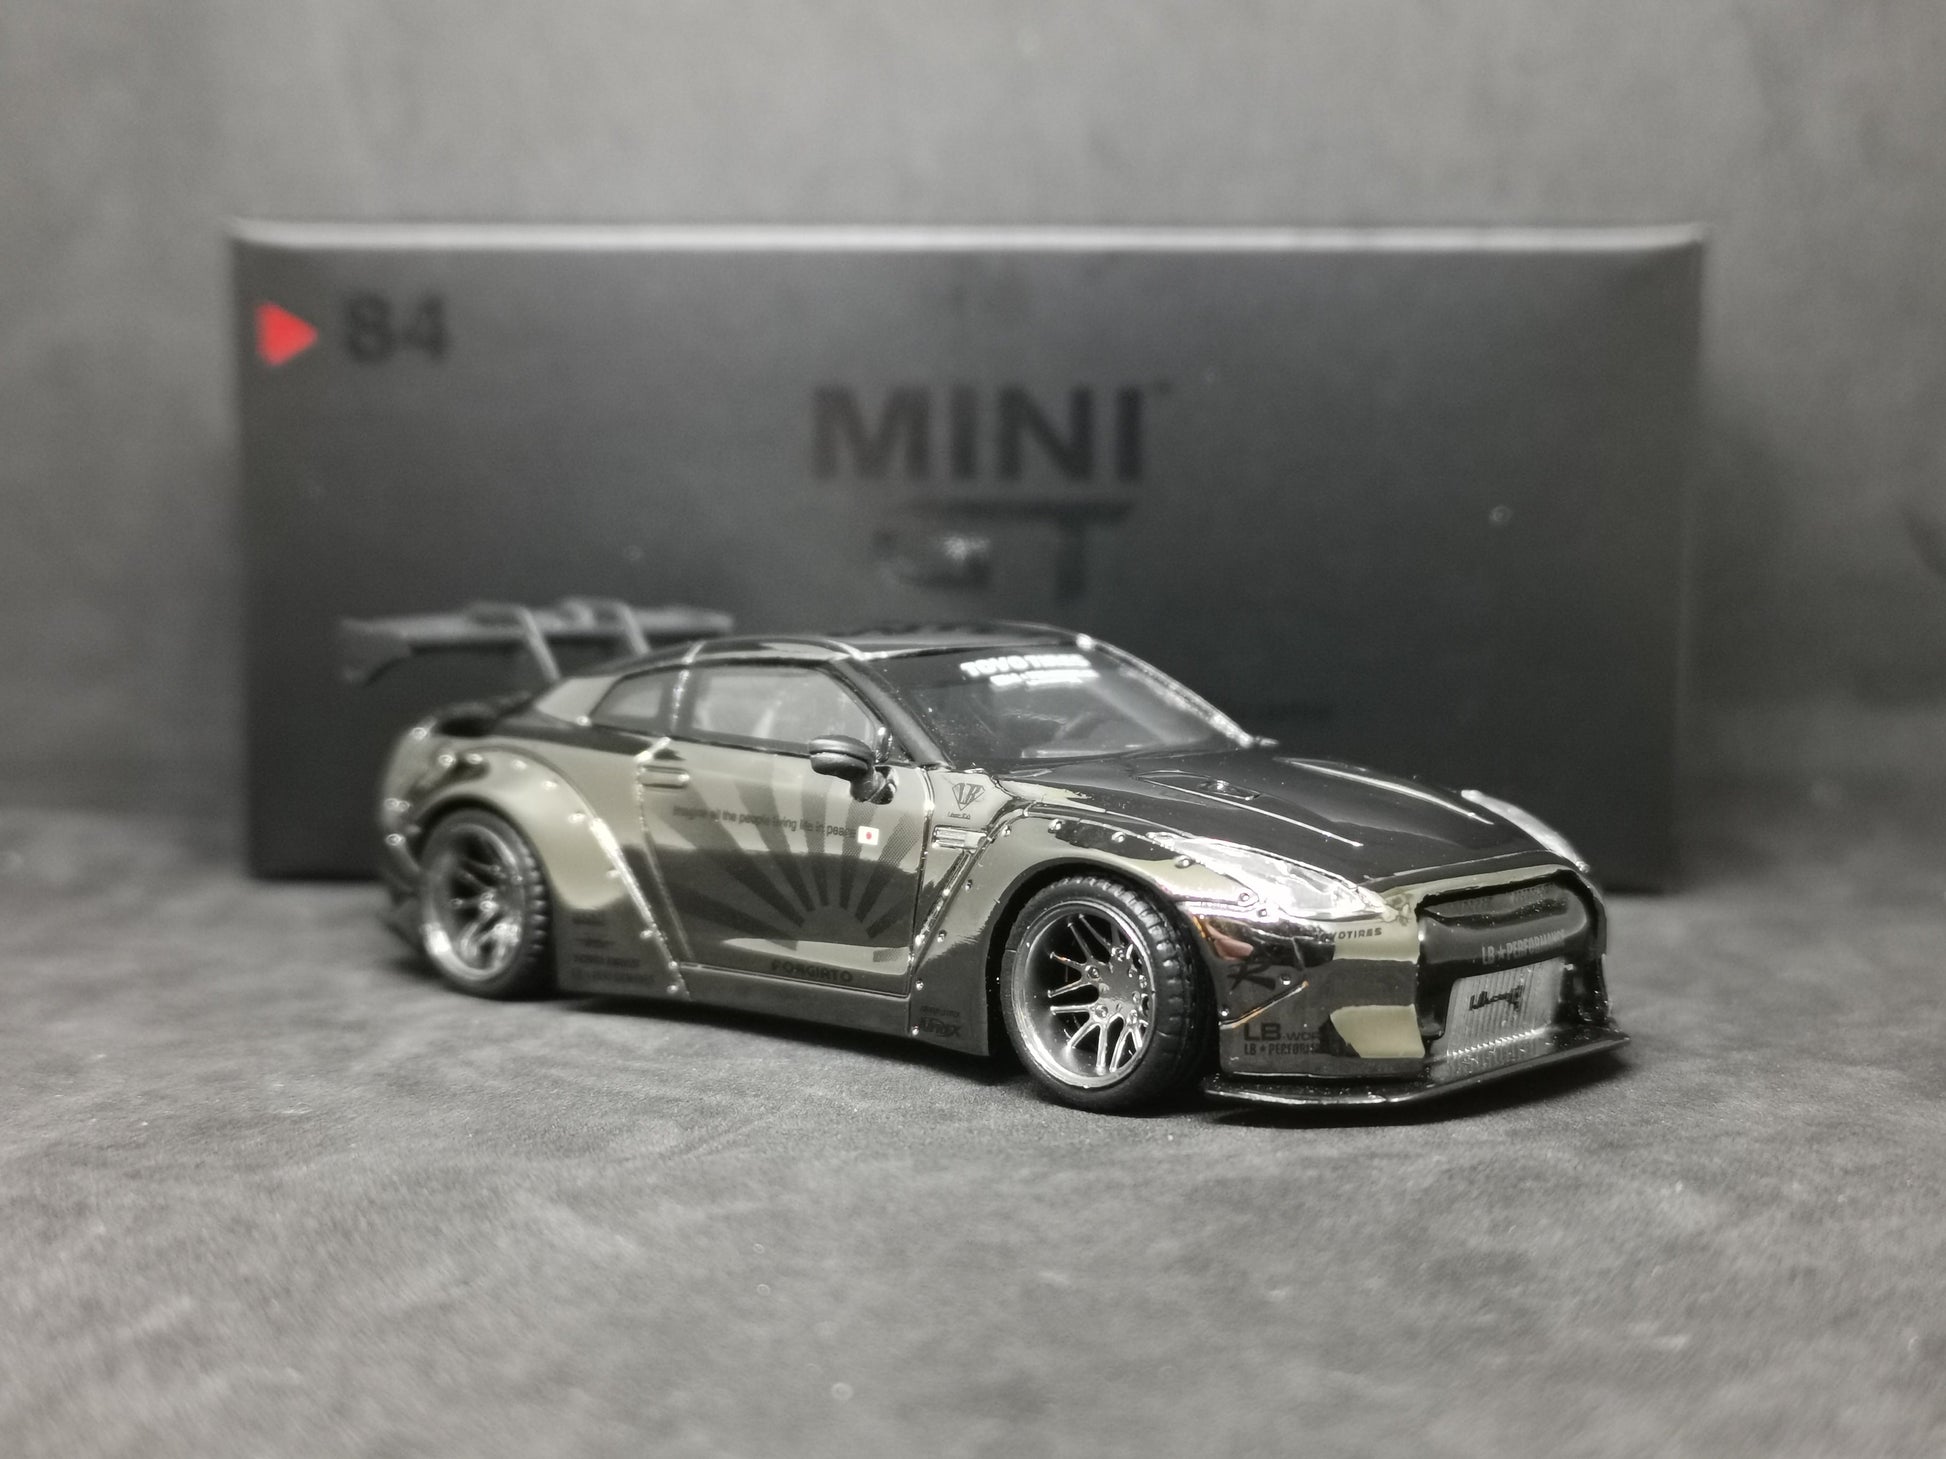 Mini GT No.84 LB Works Nissan GT-R
Black Chrome Mini GT